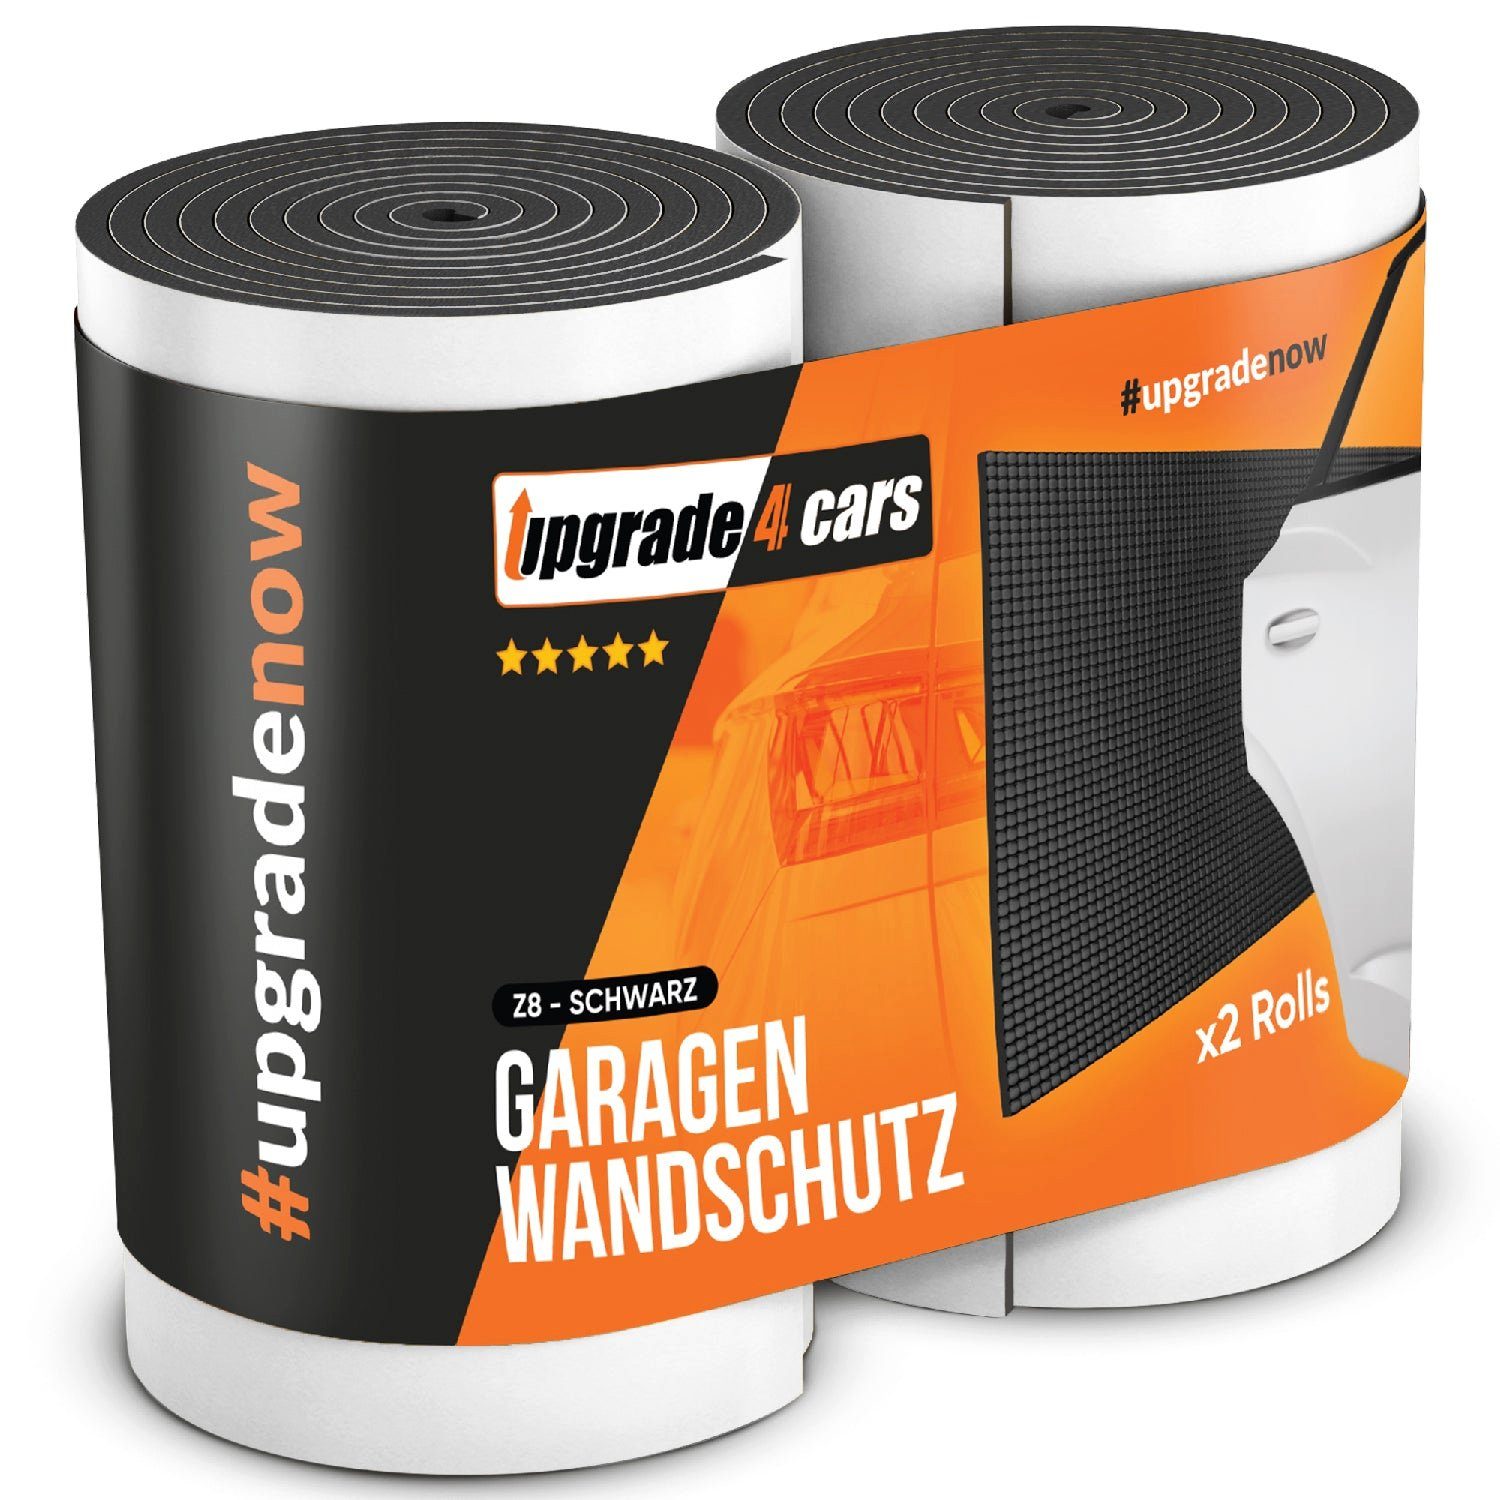 Upgrade4cars Garagen-Wandschutz Garagen Wandschutz Rolle